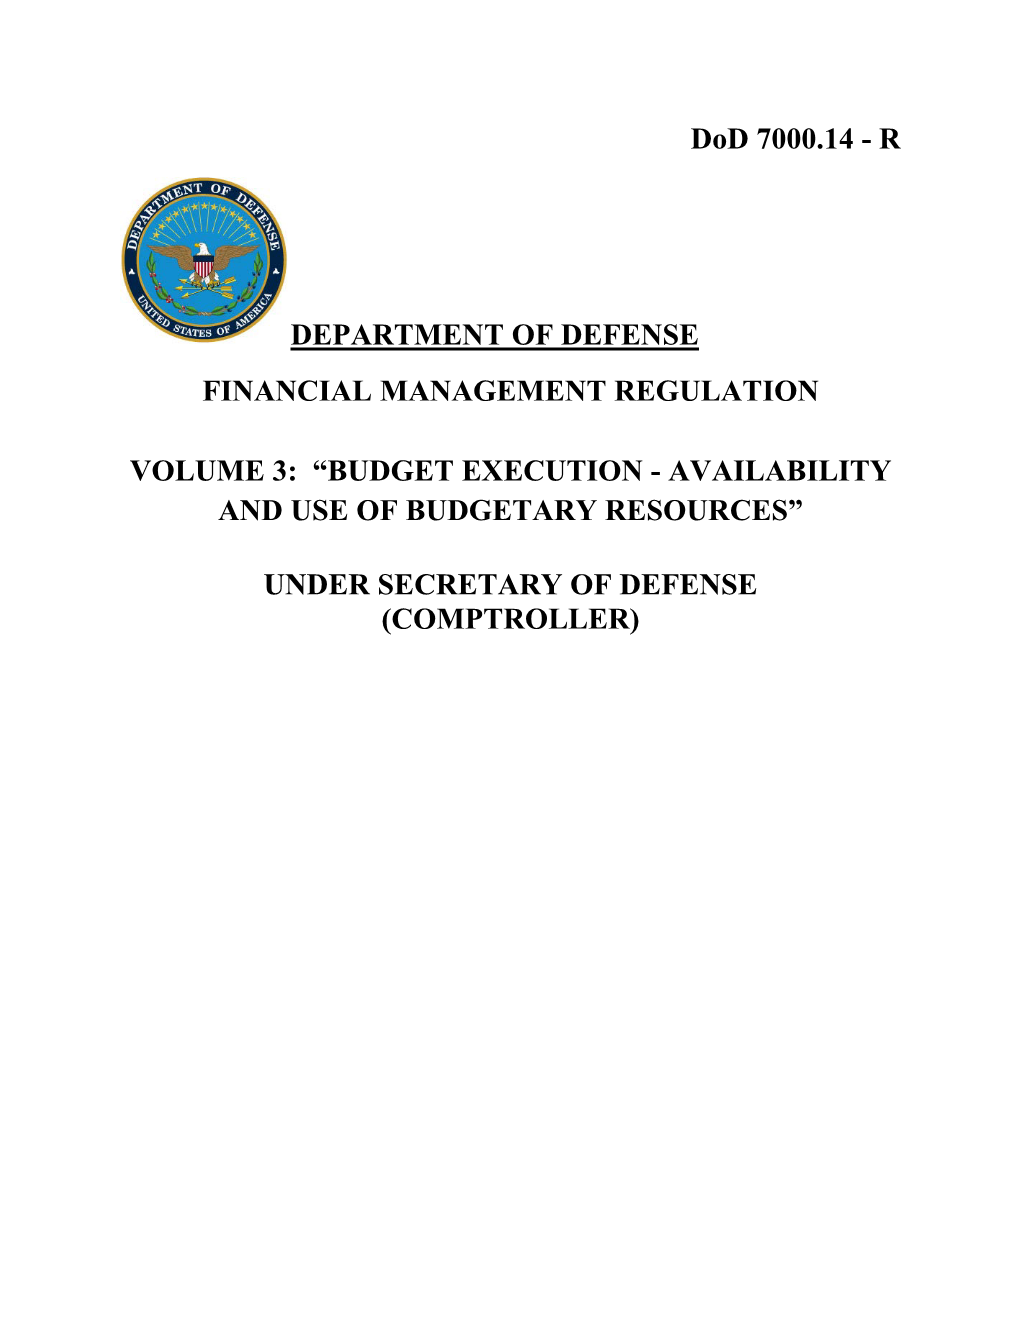 Dod 7000.14-R Financial Management Regulation Volume 3, Chapter 5 Appendix a * January 2011 APPENDIX A